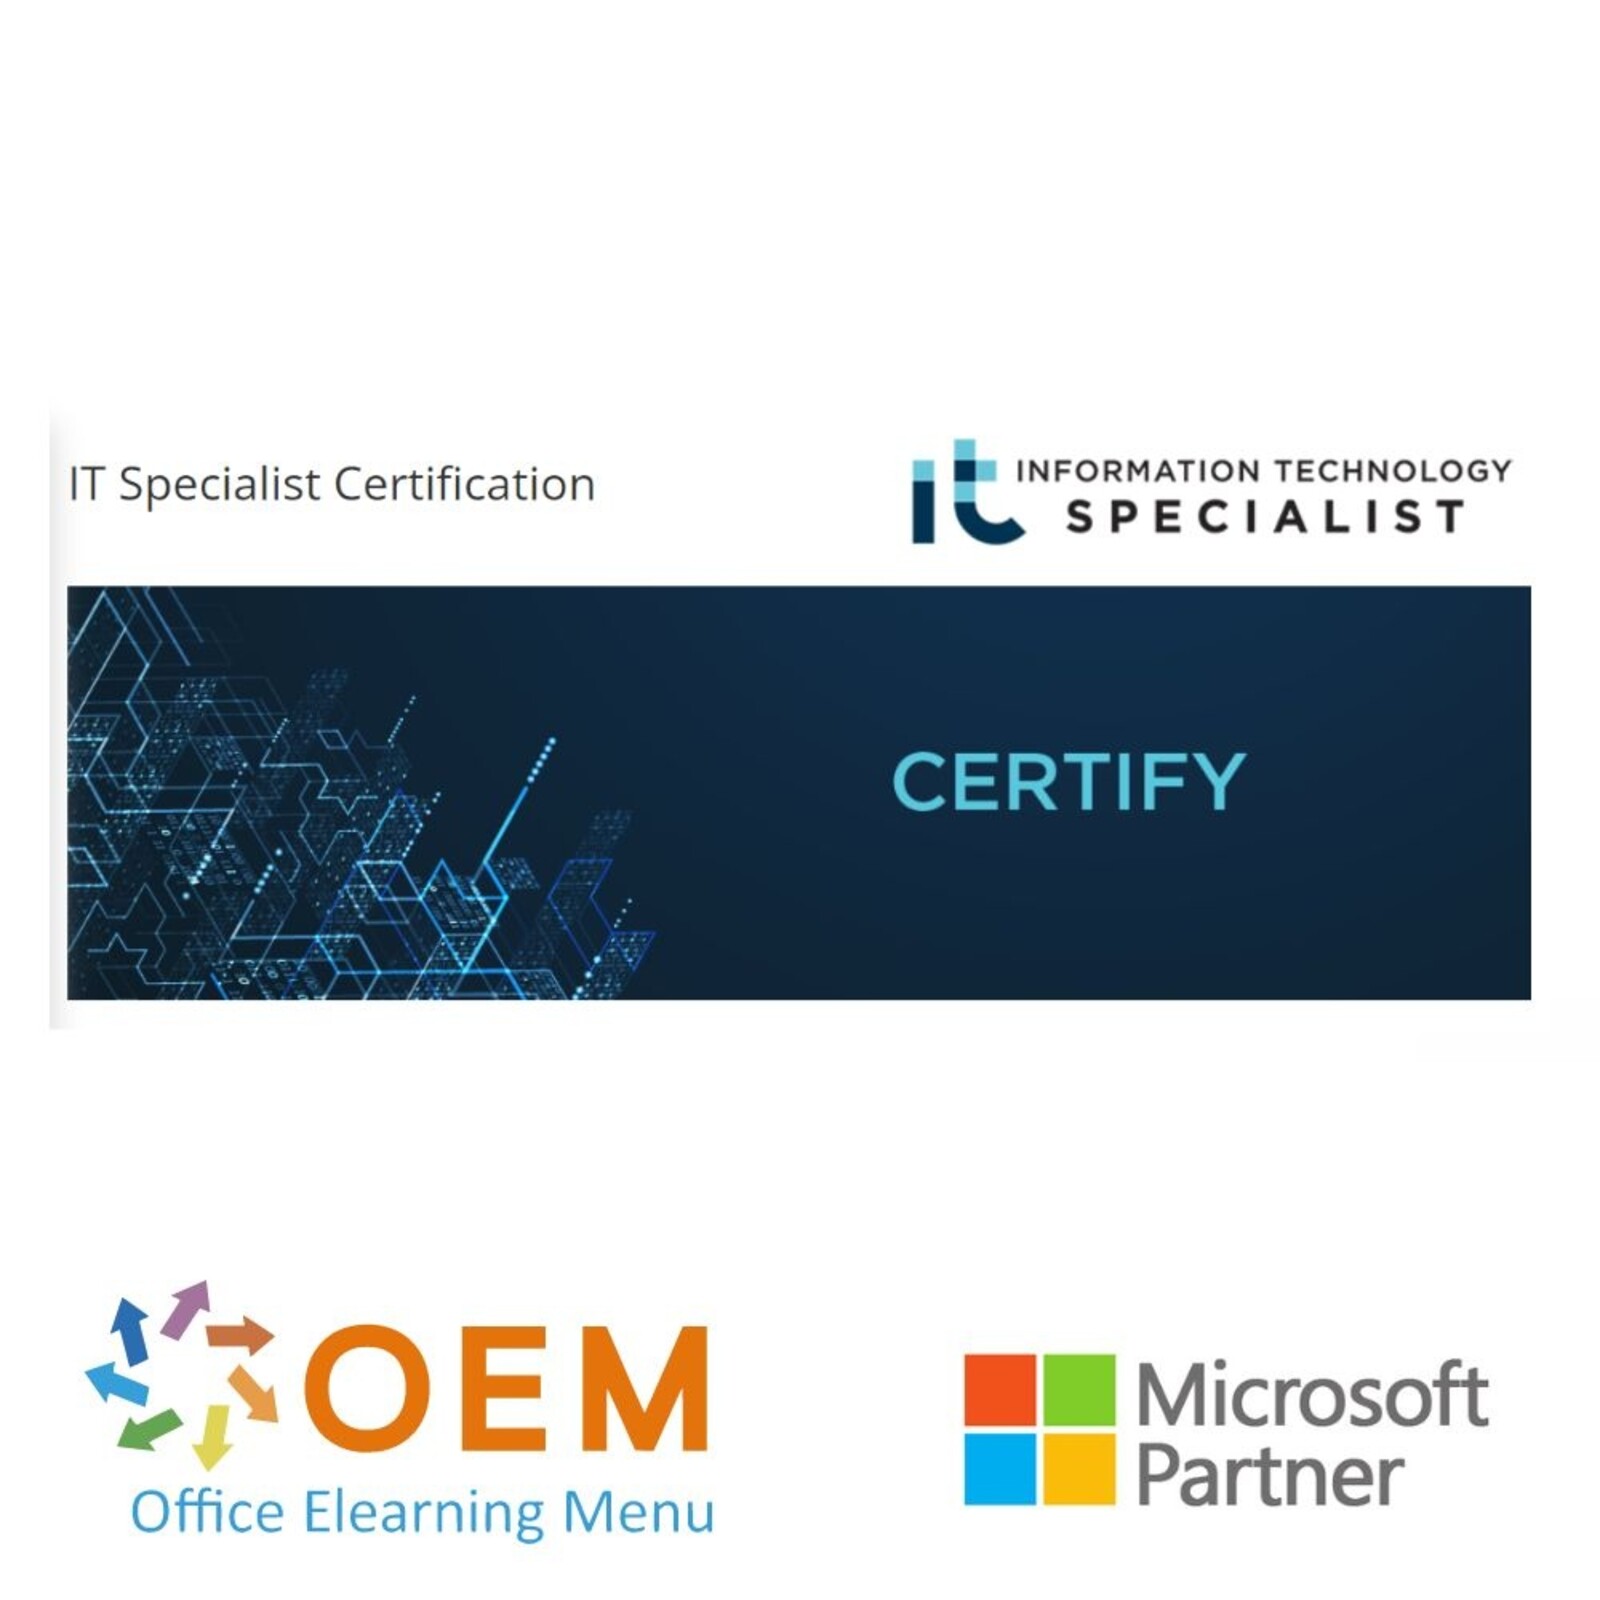 Certiport - Pearson Vue Examen Software Development